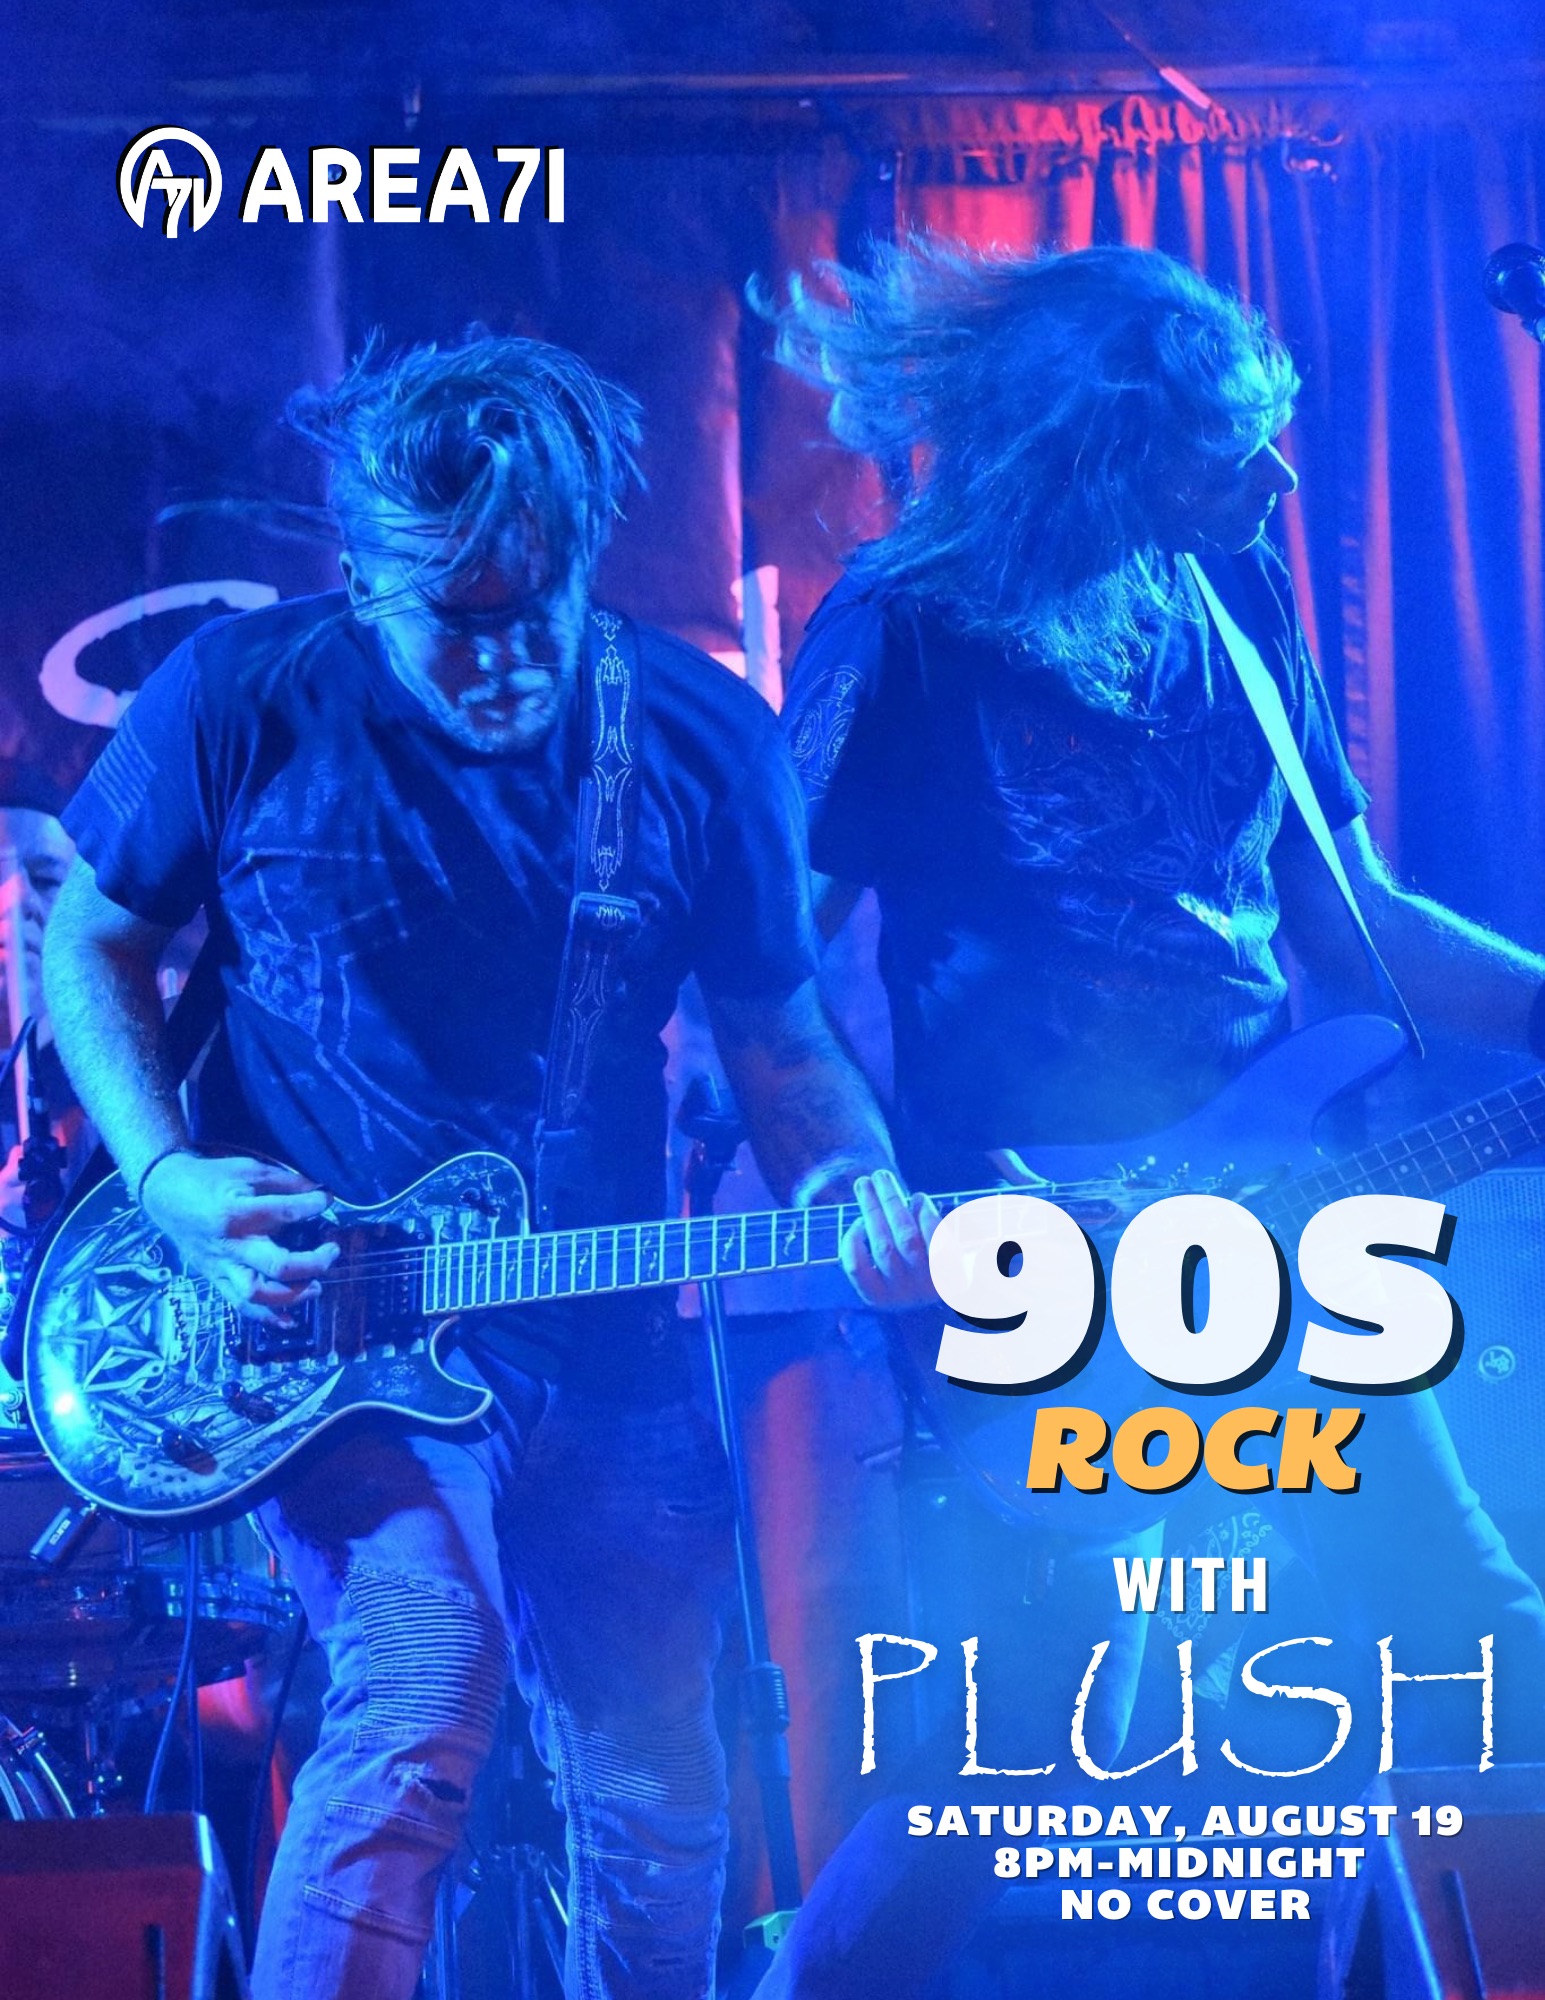 PLUSH - 90s Rock Experience